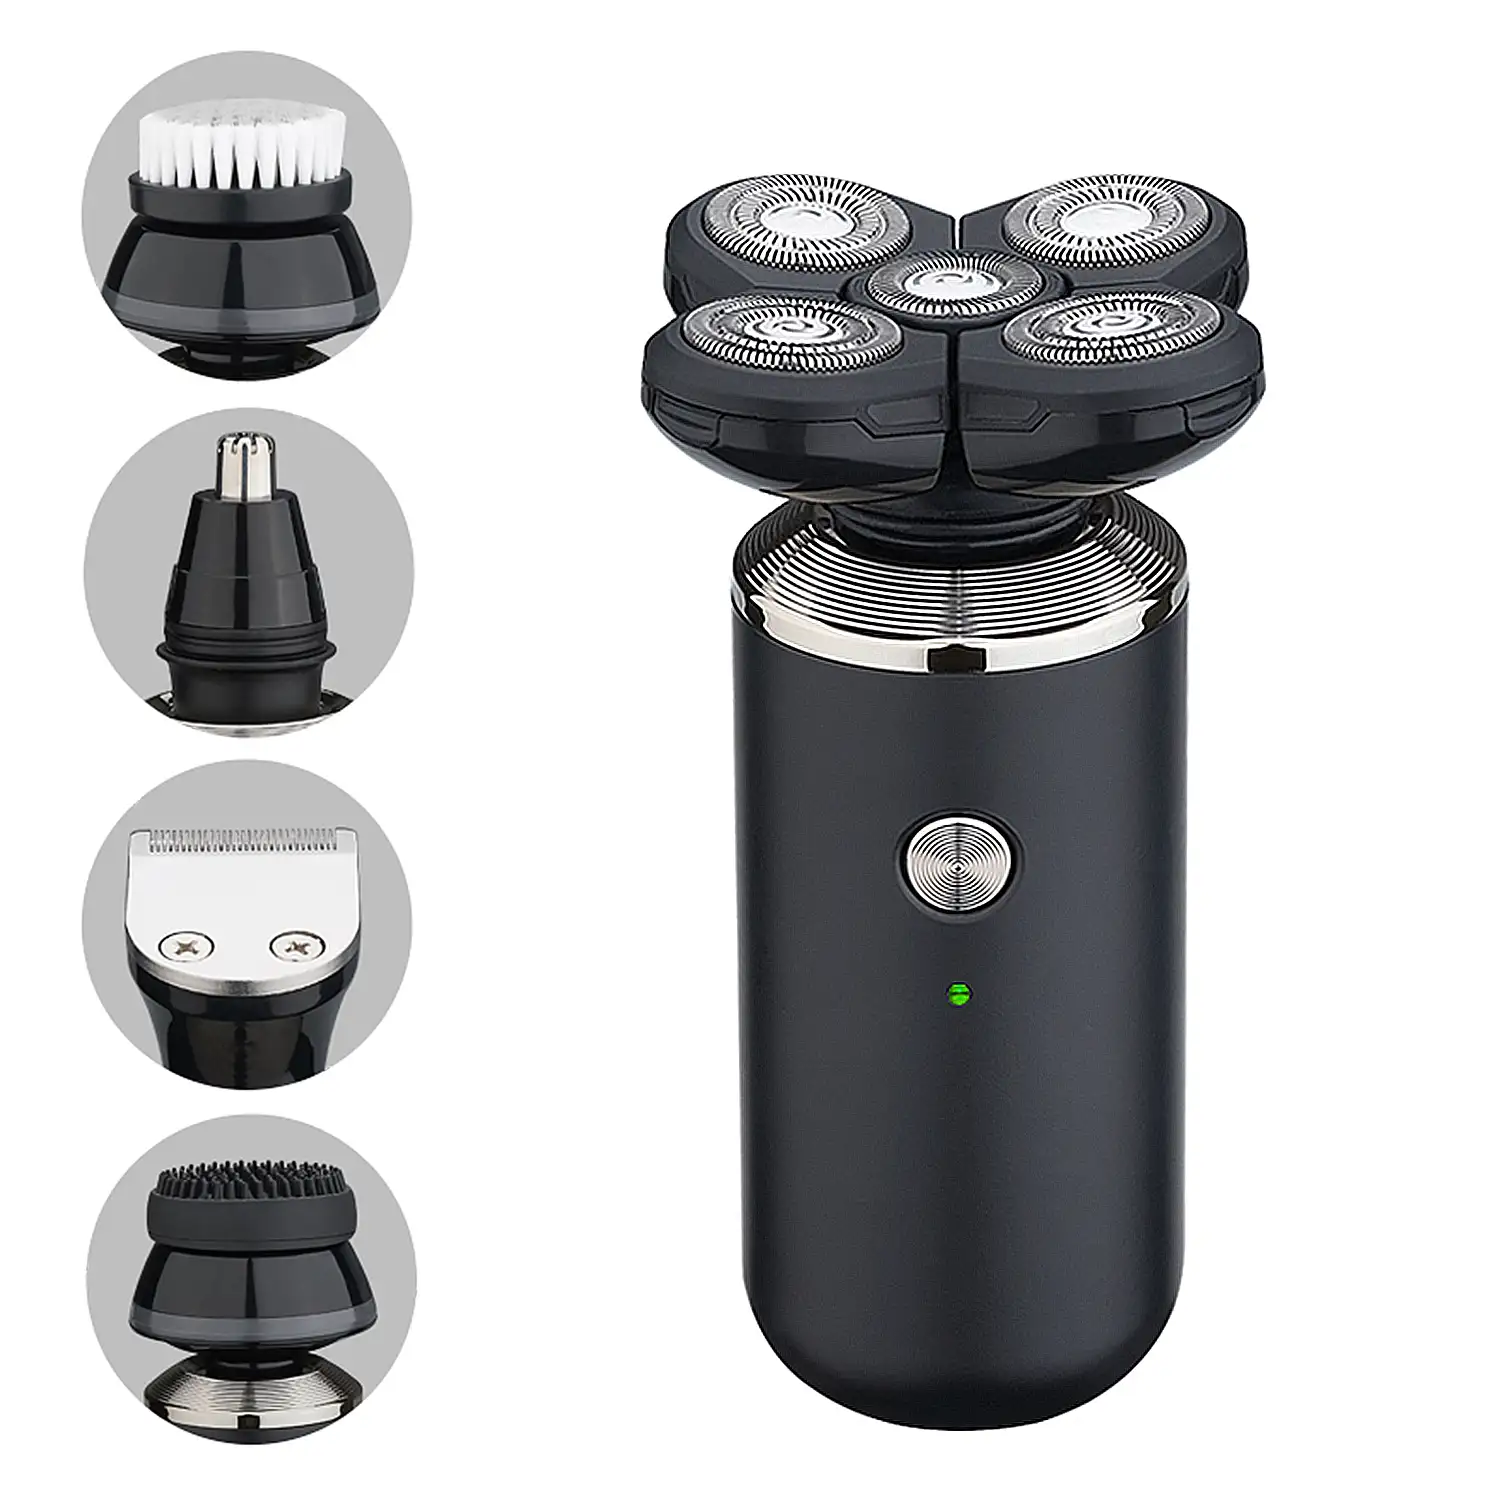 Máquina de afeitar 5D multifunción 5 en 1. Incluye cabezal de recorte, para nariz, de masaje, cepillo y de rasurado. Batería recargable.